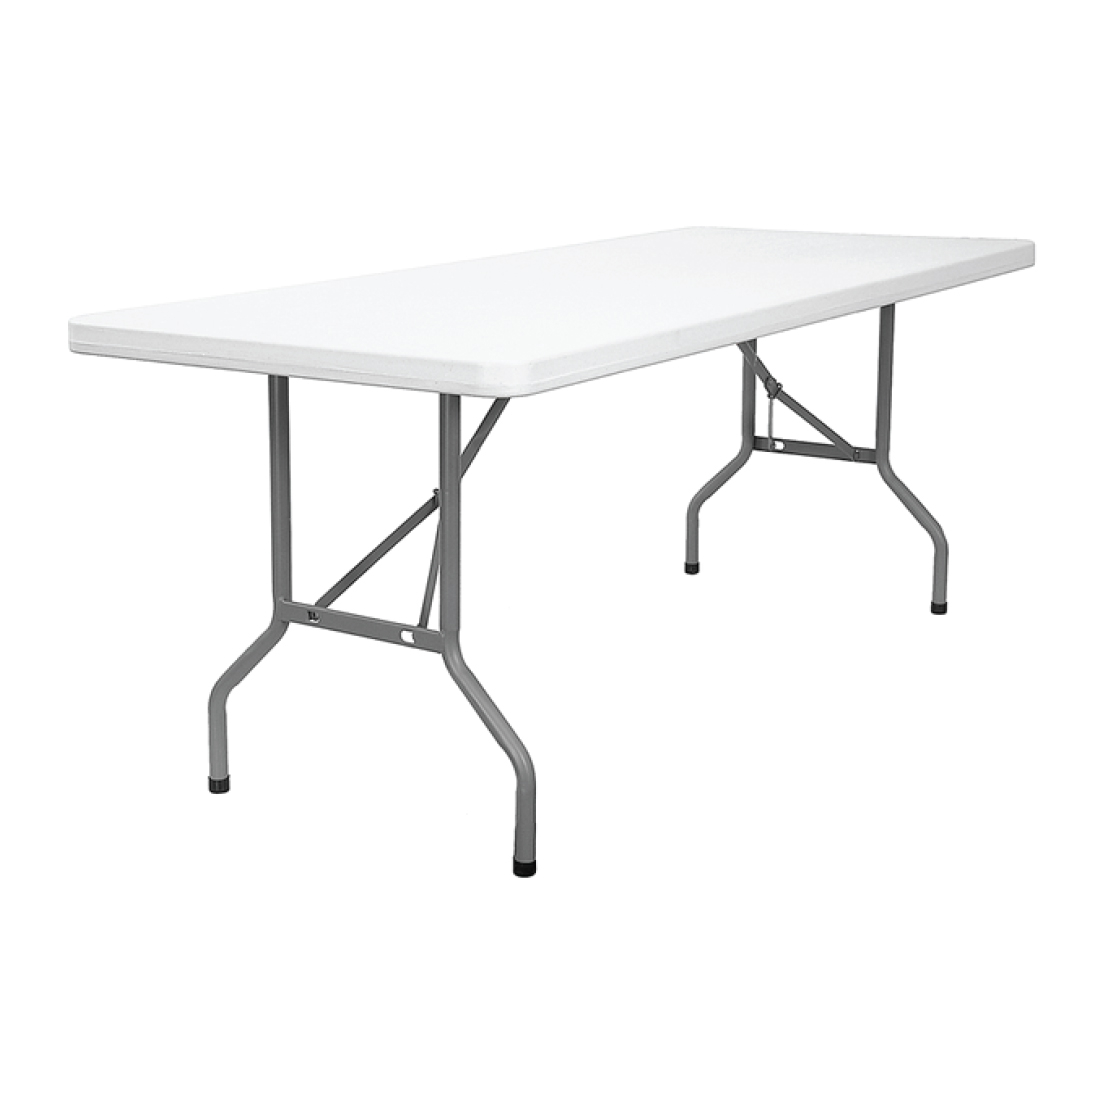 Multi purpose lightweight plastic folding tables